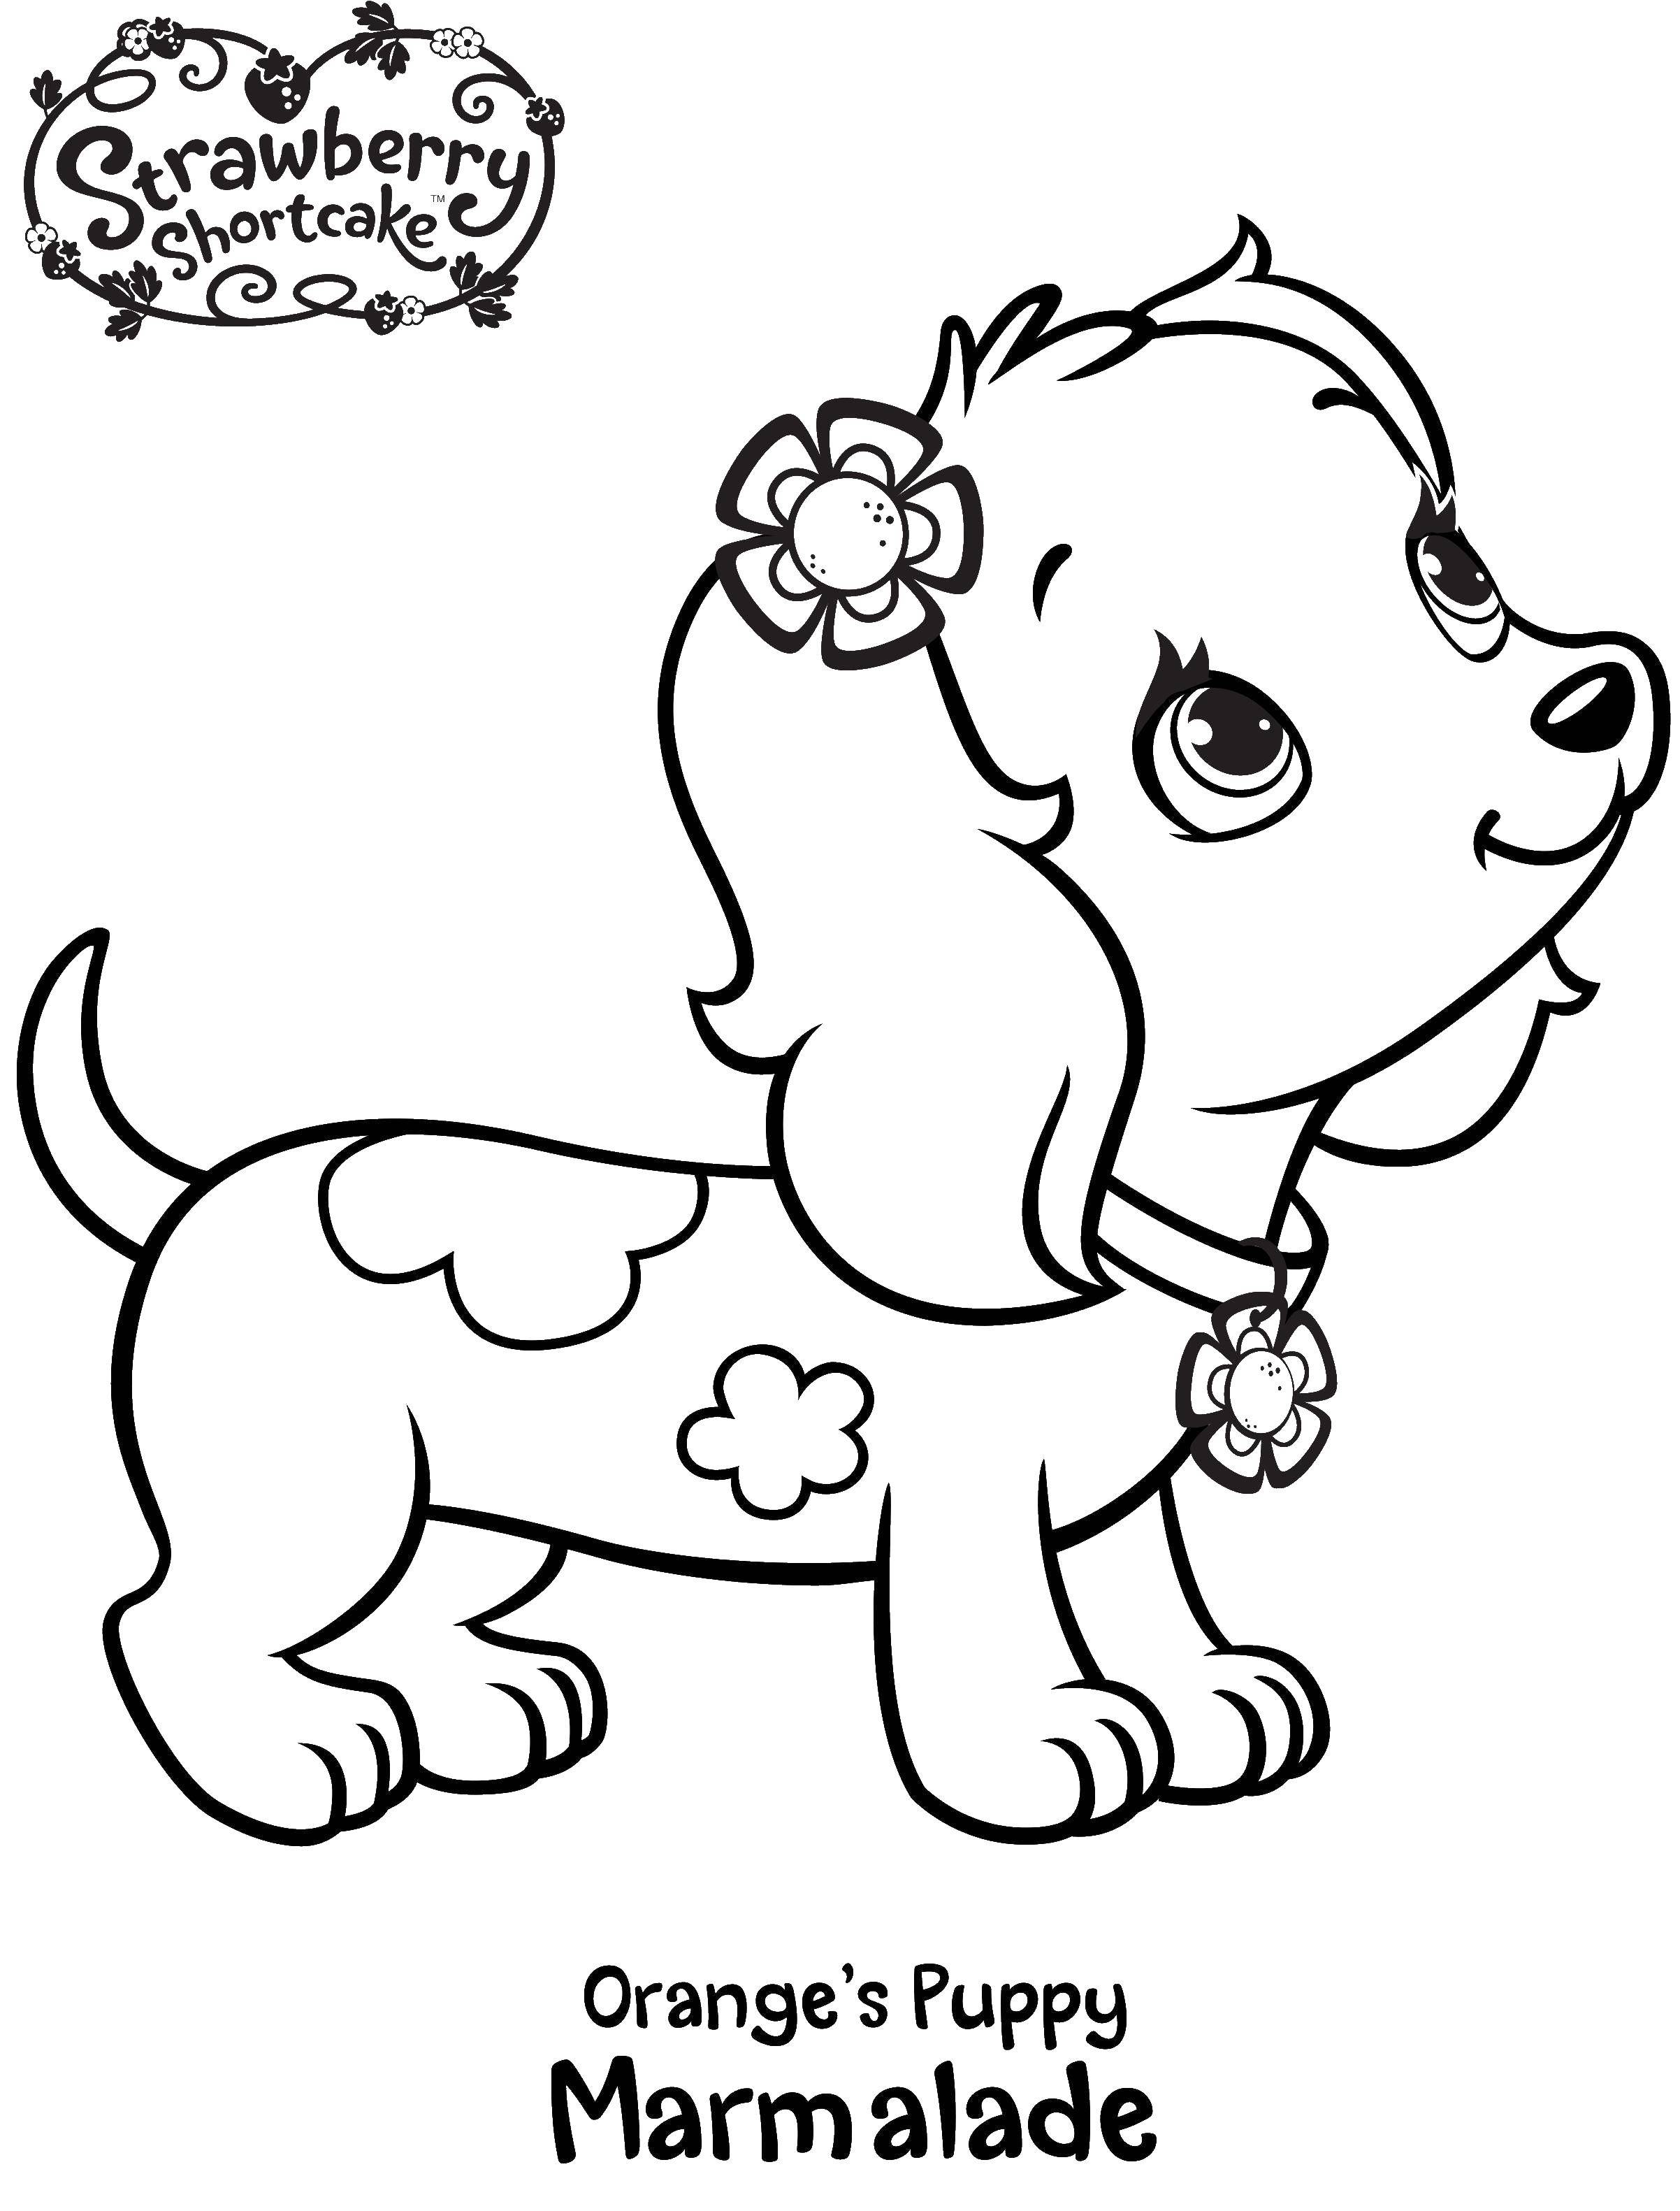 Coloring Puppy apelsinka jellybean. Category Charlotte zemlyanichka cartoons. Tags:  Charlotte, a strawberry, cartoons, dog.